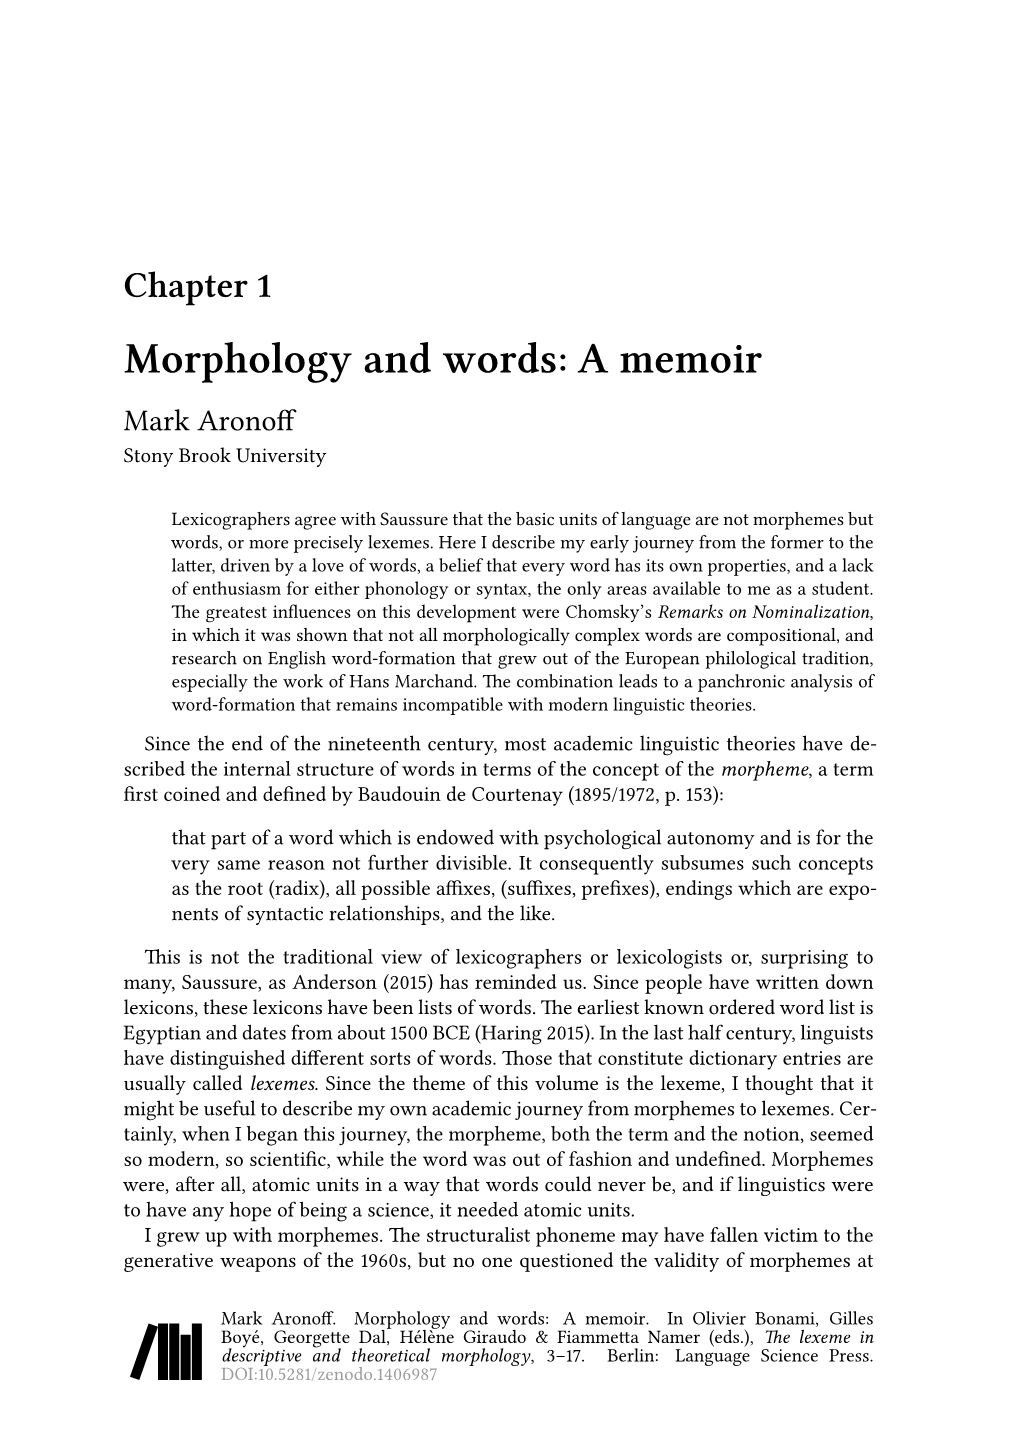 Morphology and Words: a Memoir Mark Aronoff Stony Brook University